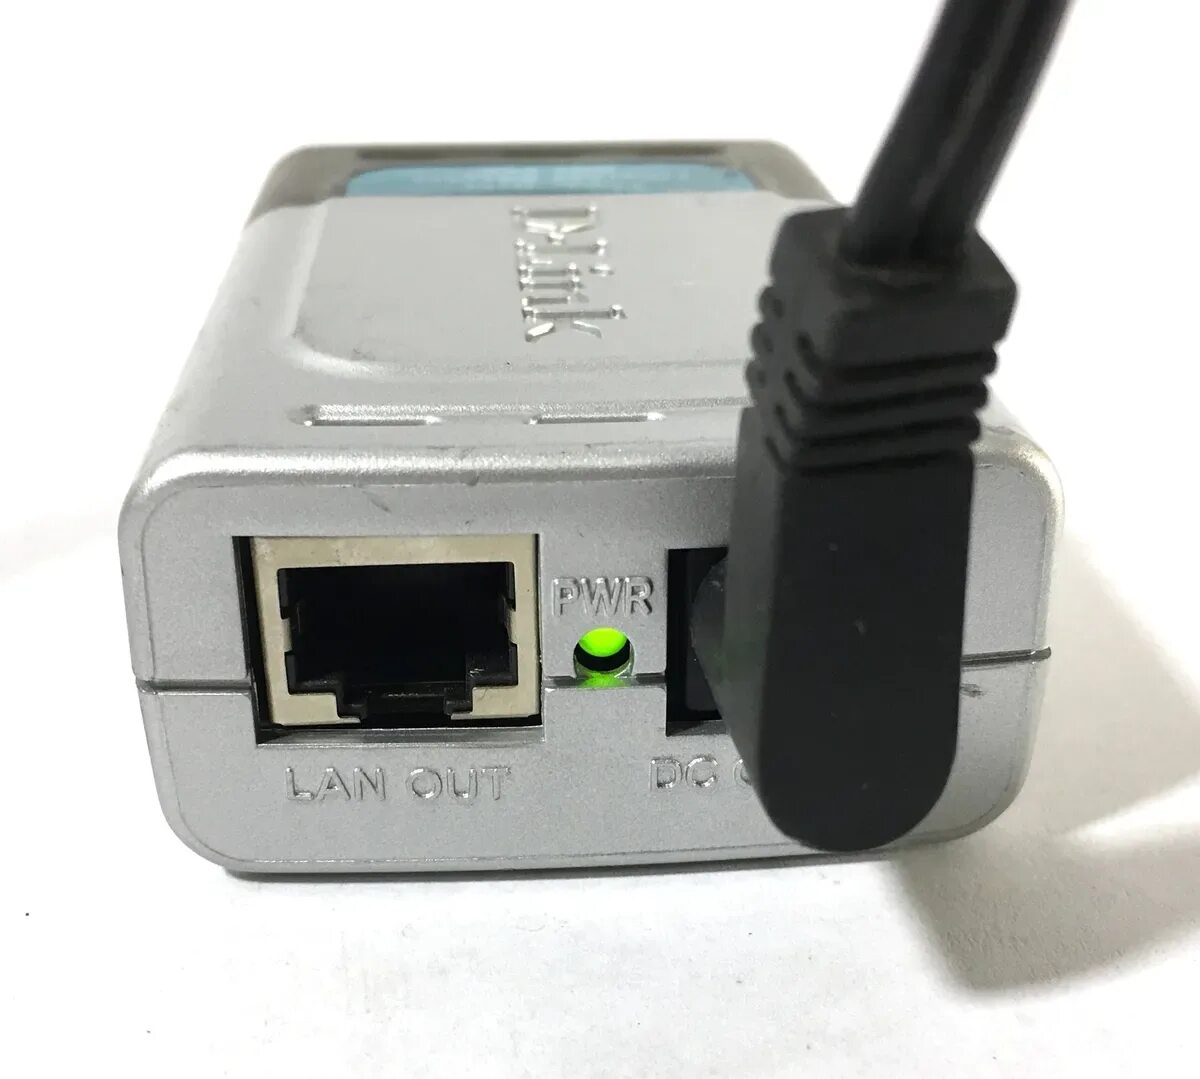 POE D-link DWL-p100. D-link DWL-p50. Адаптер POE D-link DWL-p100. USB over Ethernet адаптер.